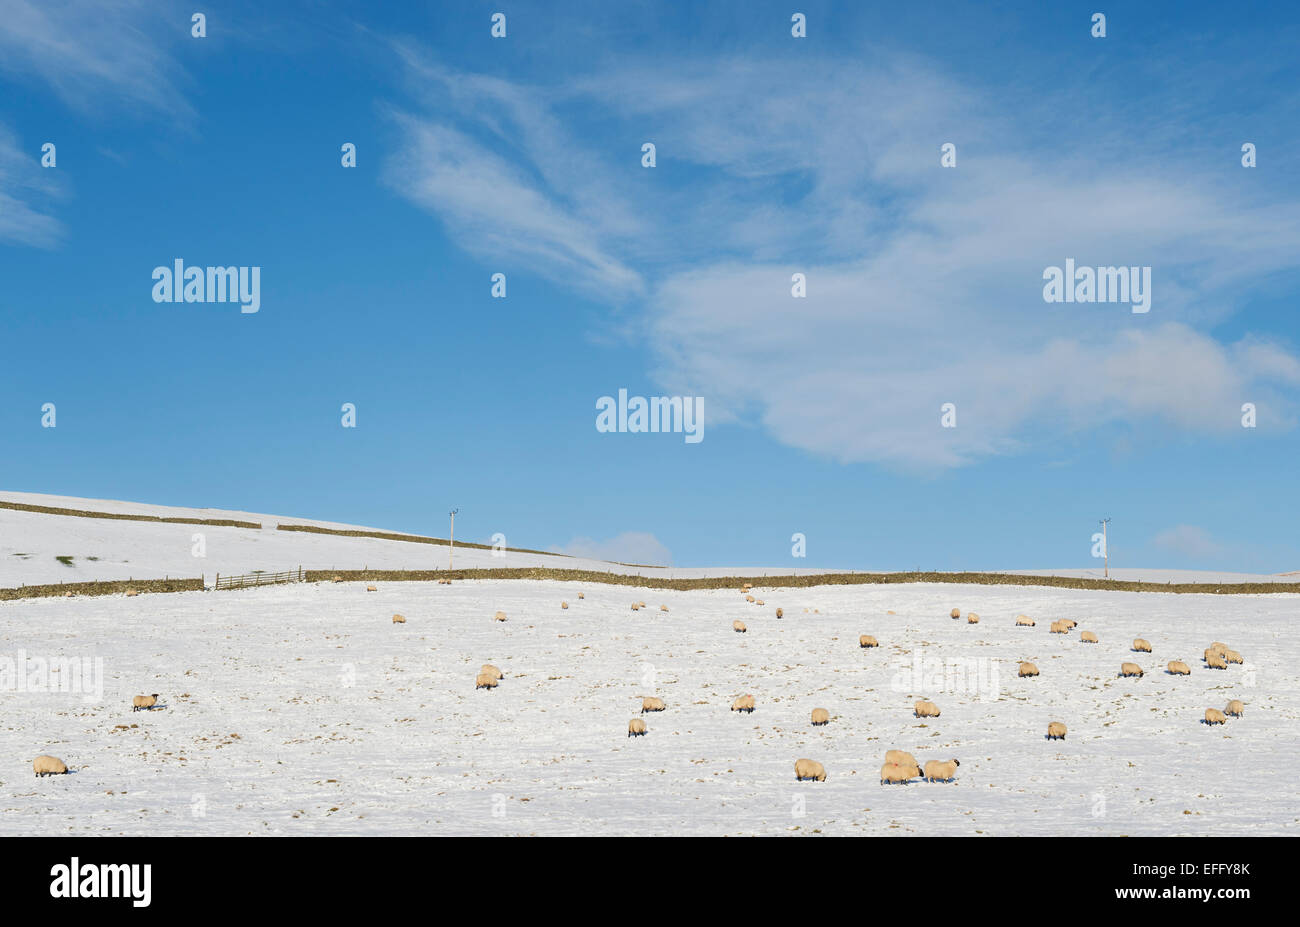 Sheep in a snowy field in winter. Scottish borders. Scotland Stock Photo